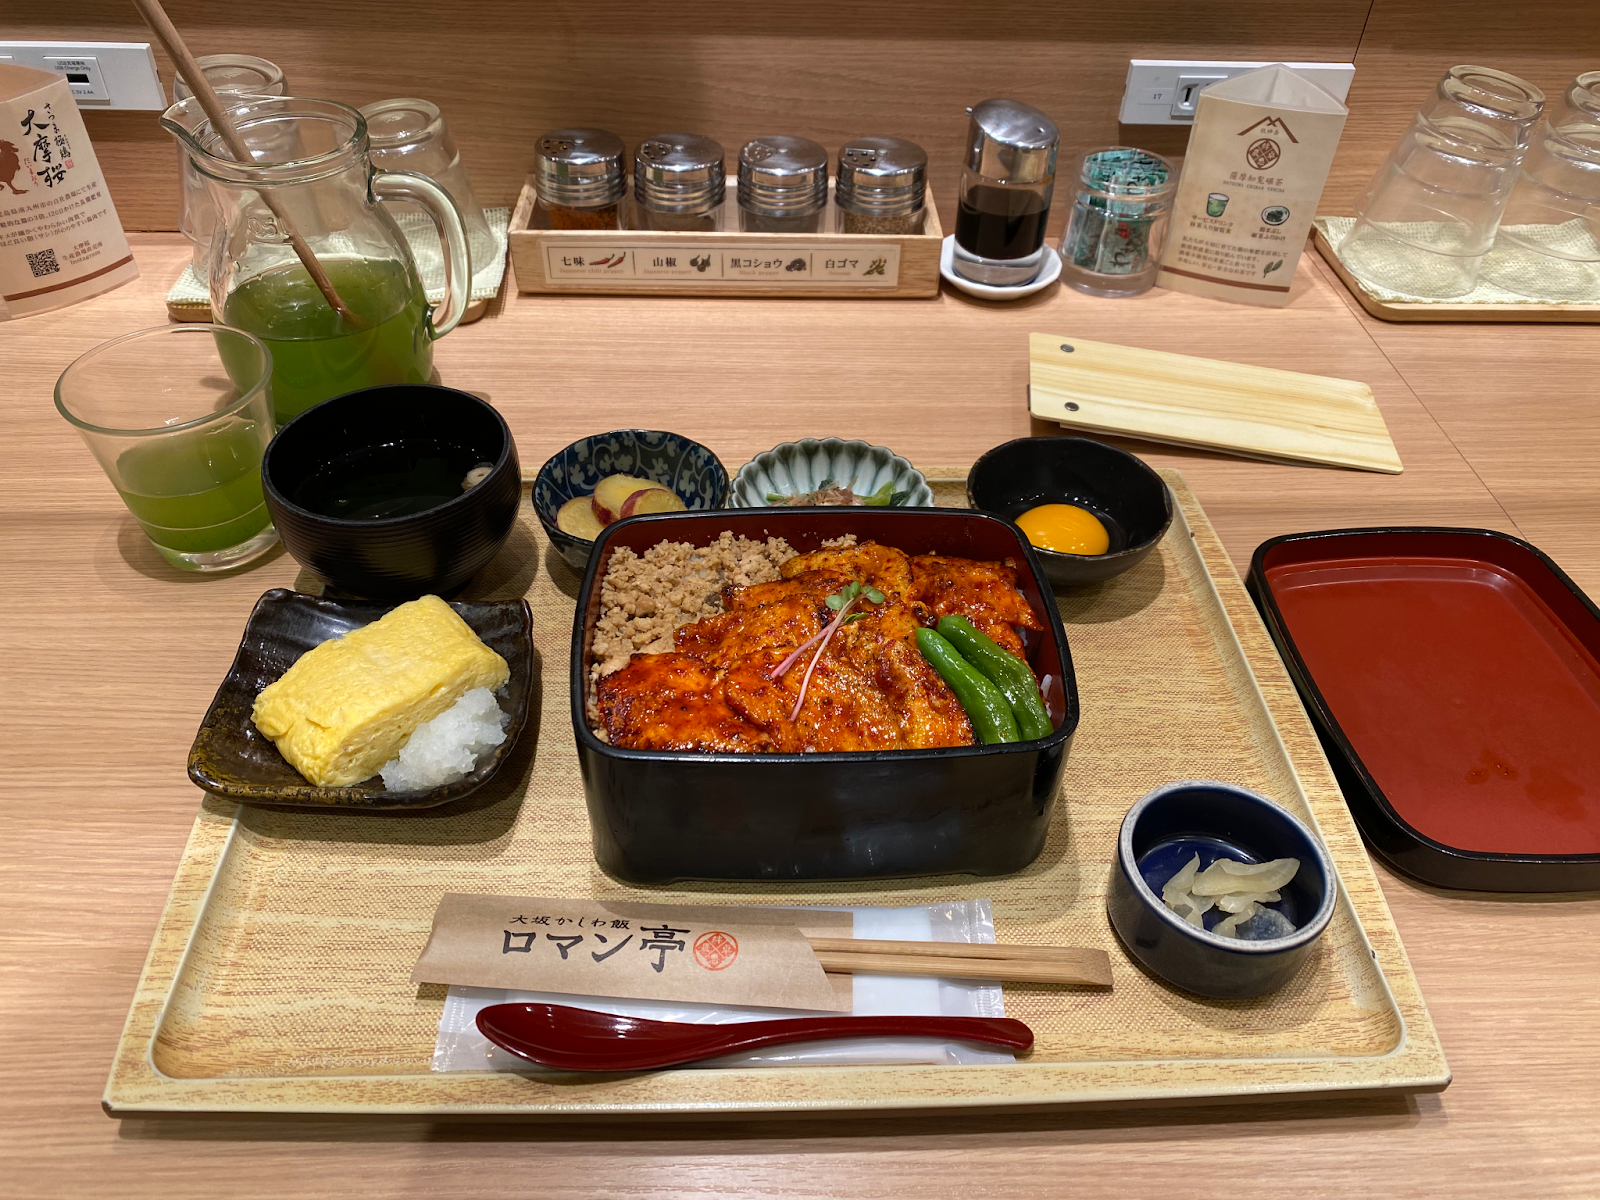 Cuisine in Japan